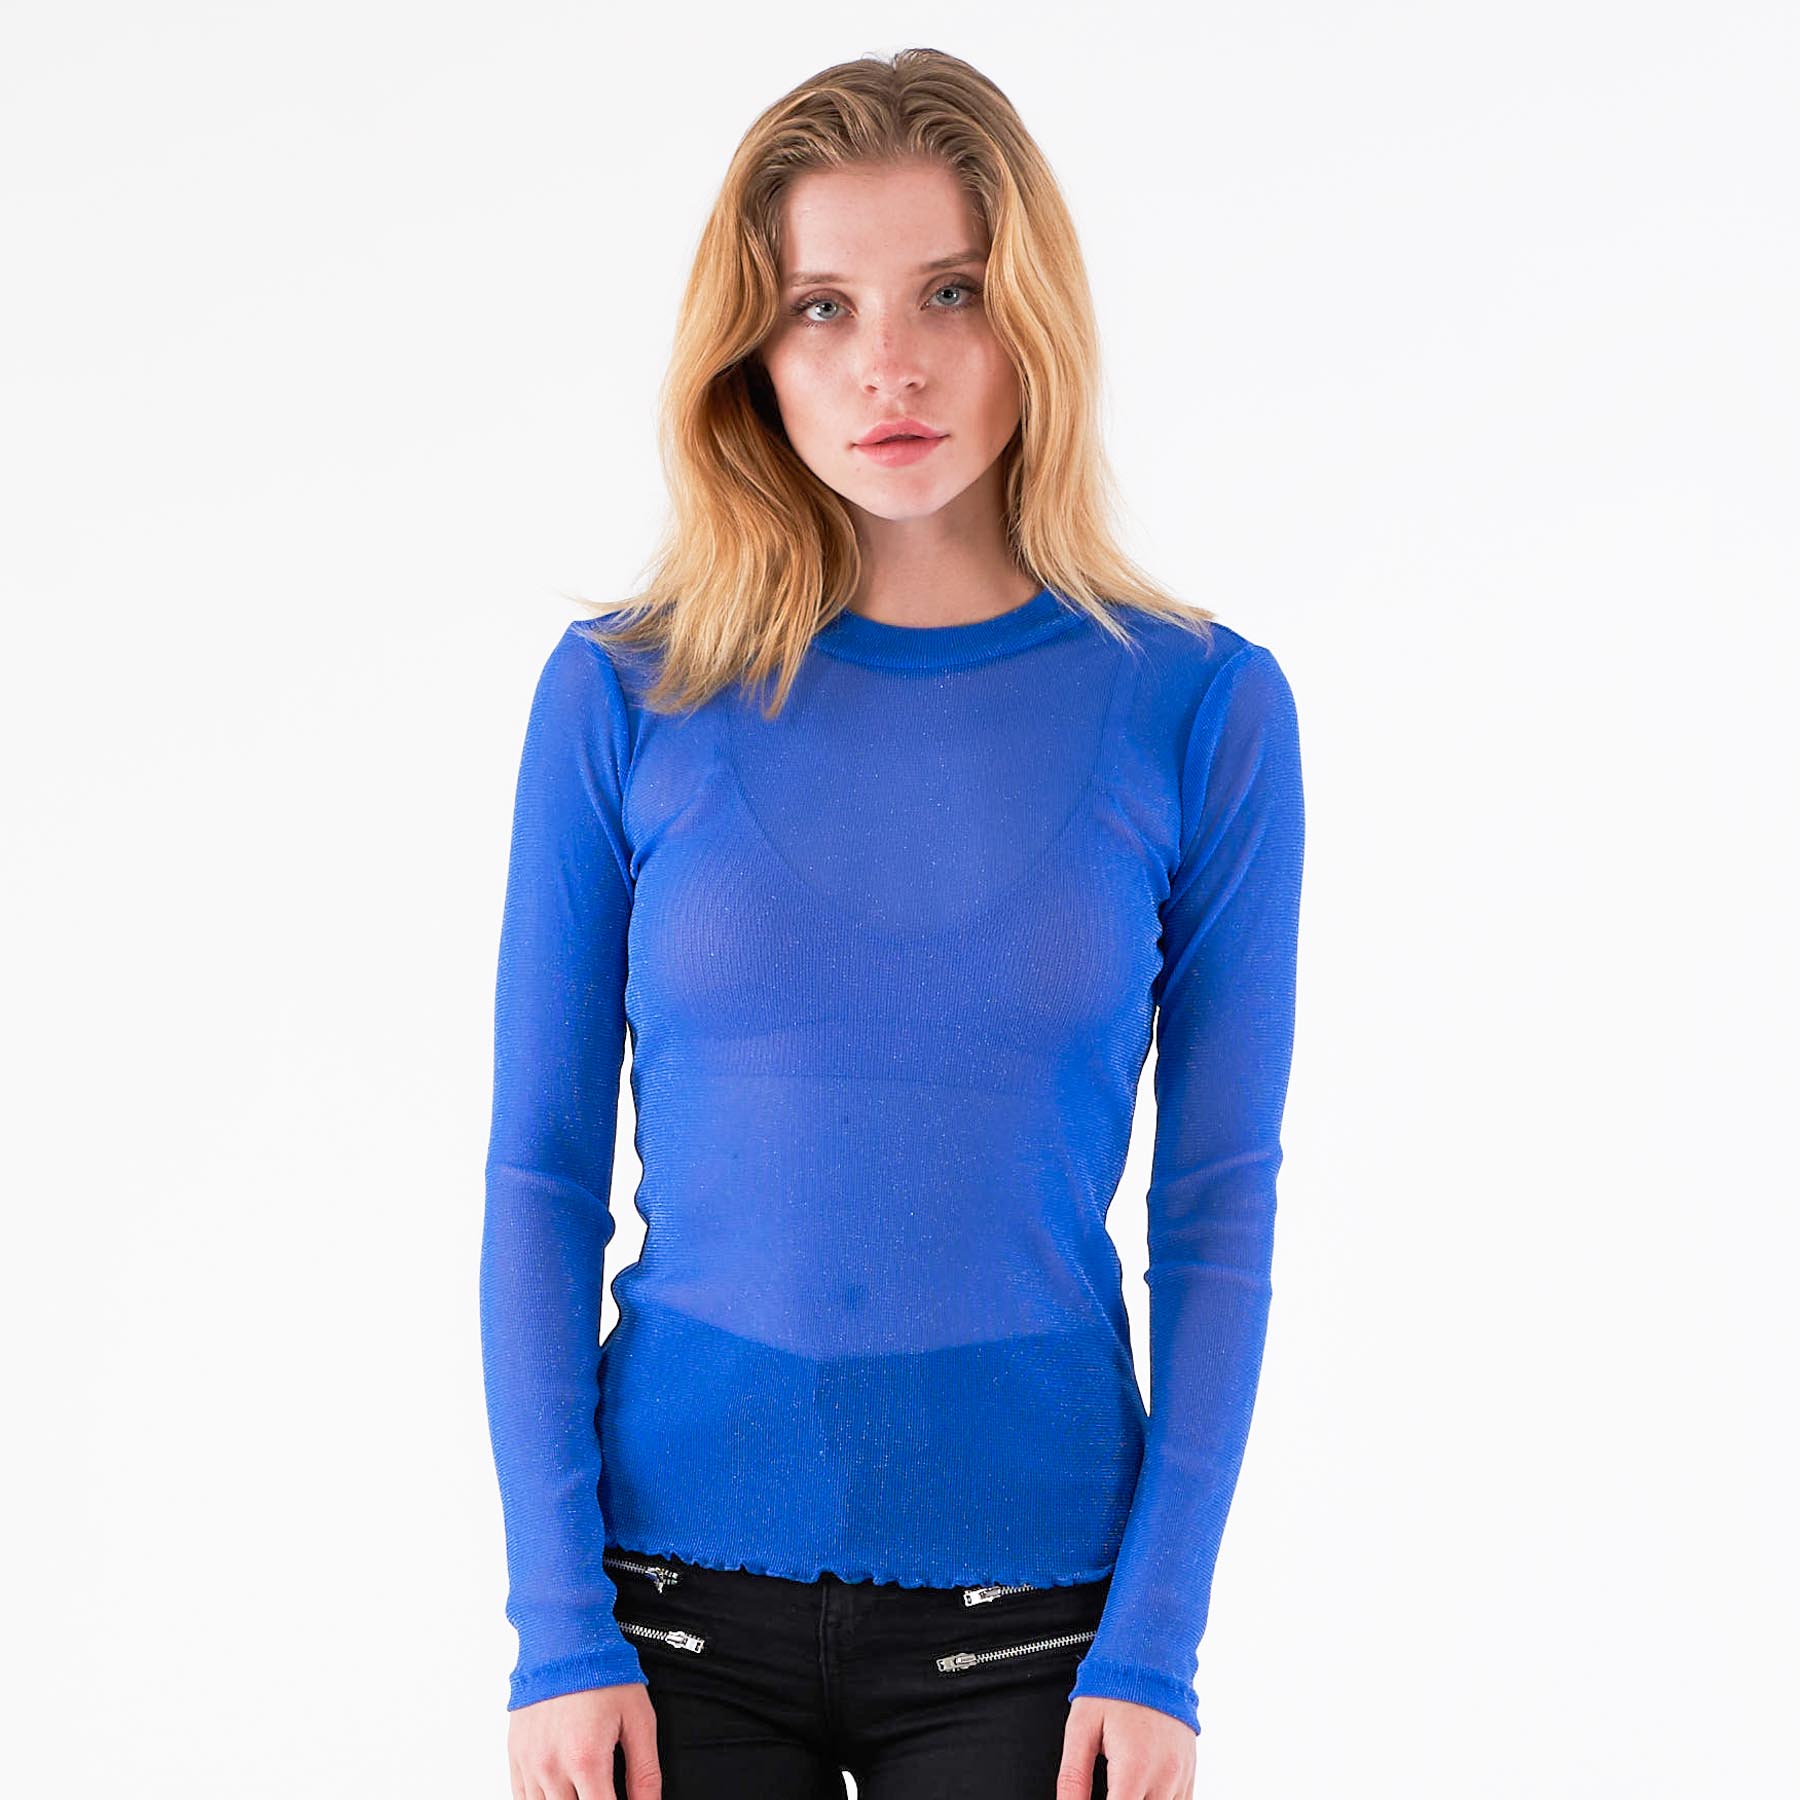 Pure friday - Purannika highneck - Bluser og skjorter til kvinder - BLUE GLITTER - S